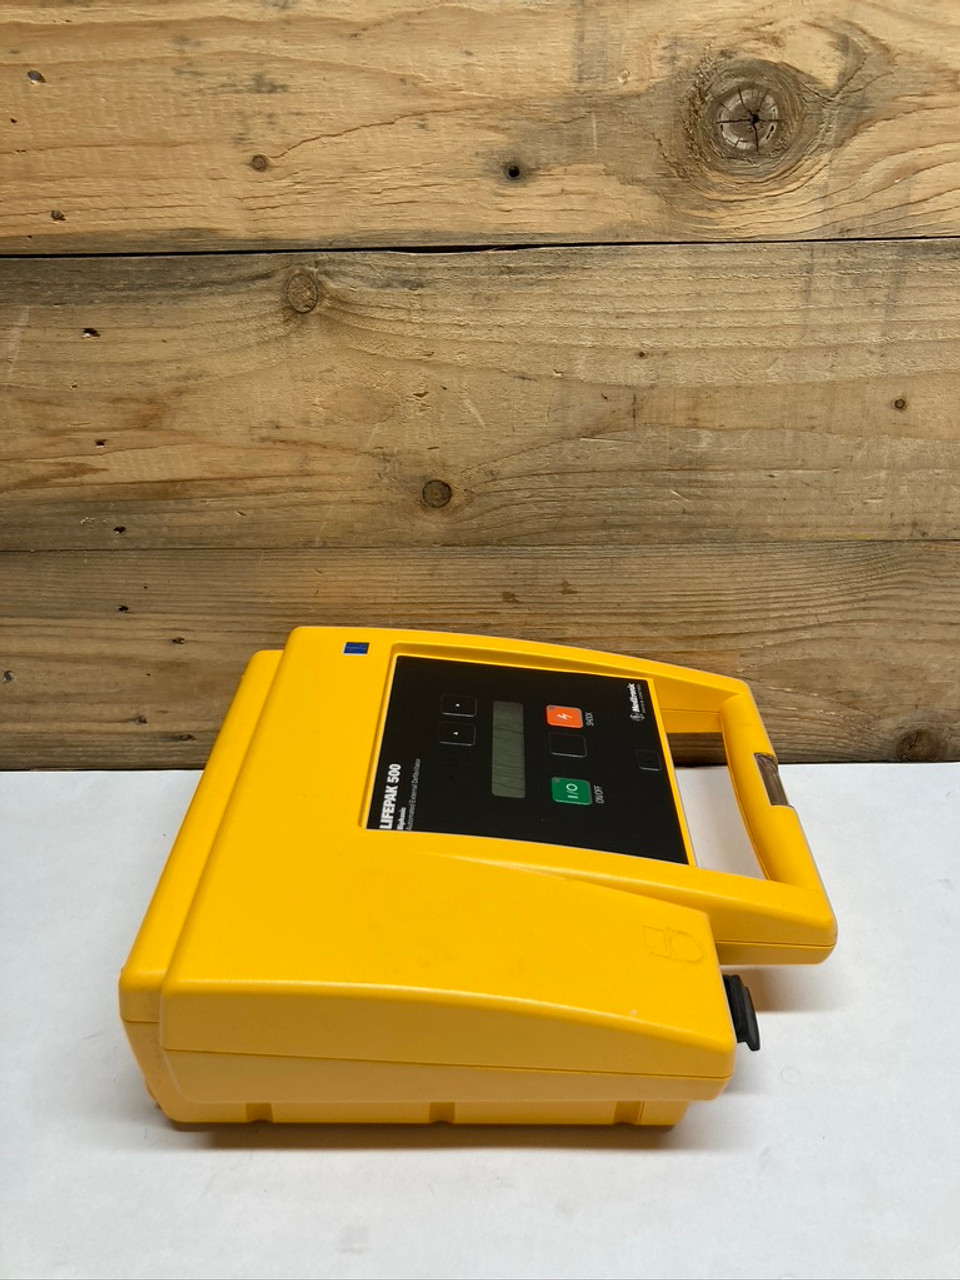 Lifepak 500 Automated External Defibrillator 3011790-001129 Physio-Control